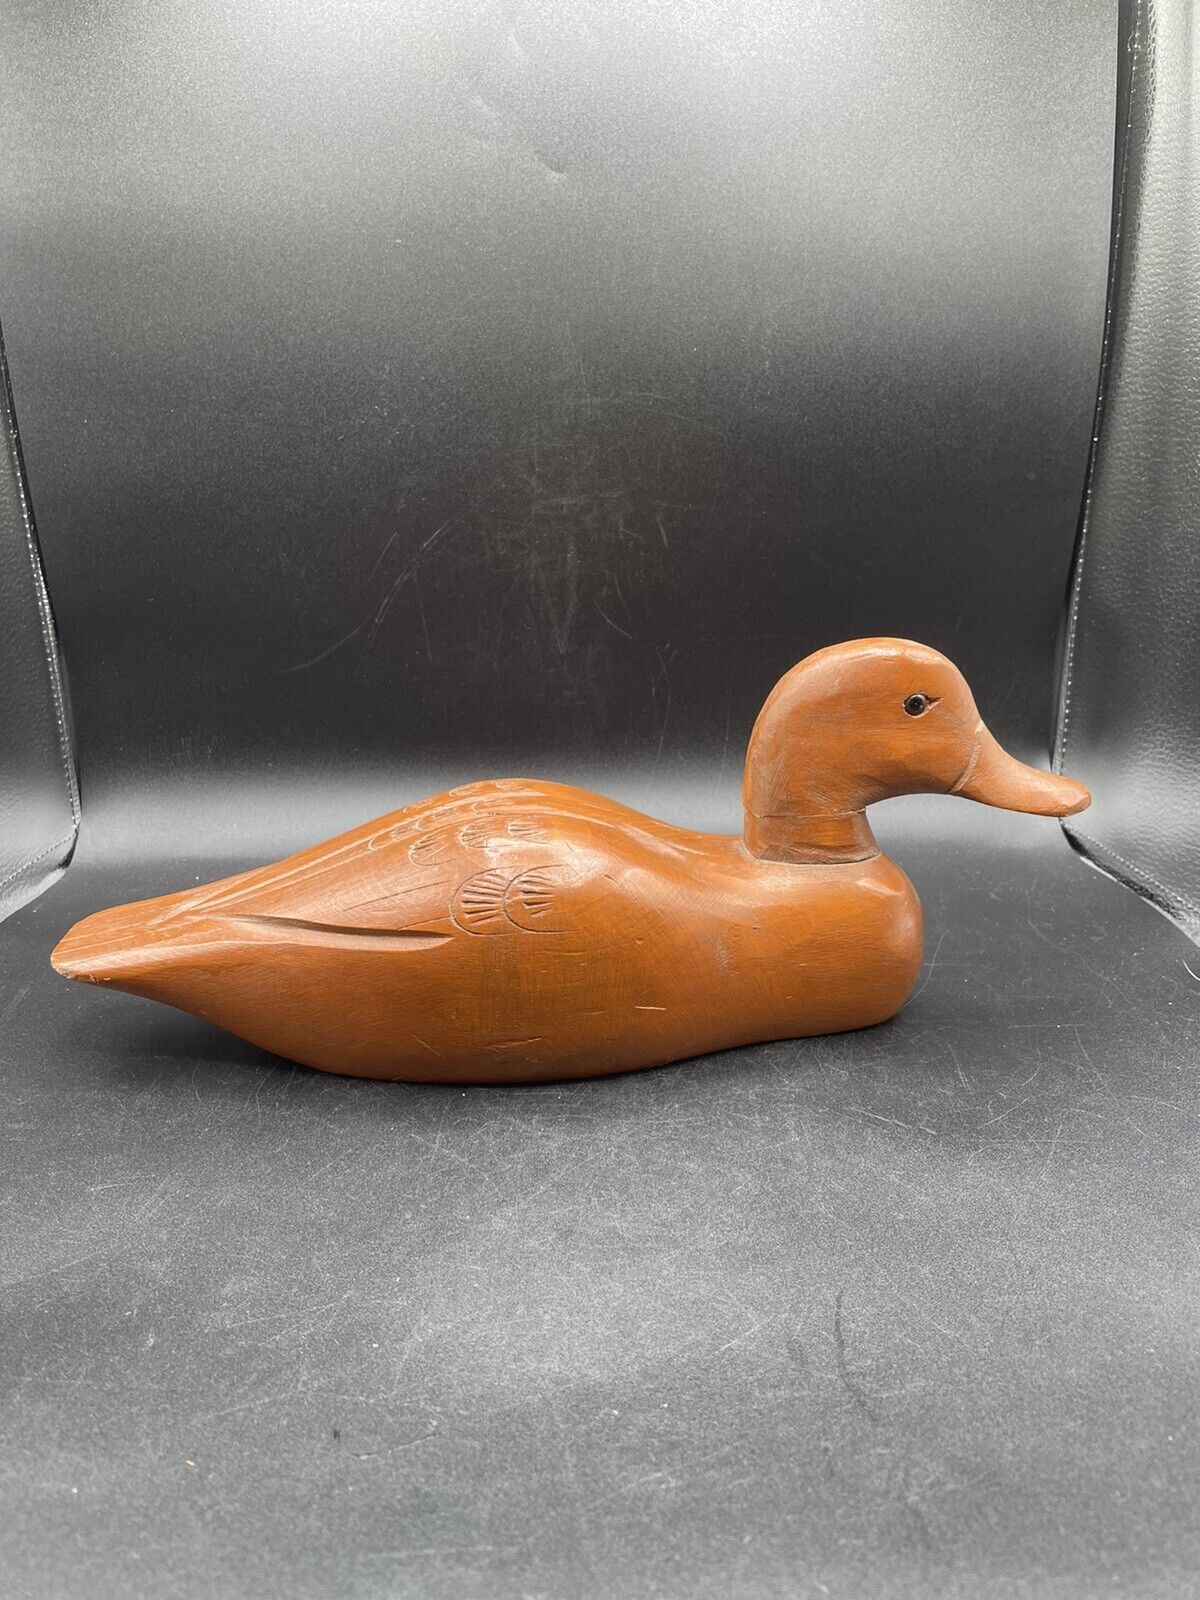 Vintage Folk Art Hand Carved Wood Stain Finished Duck Decoy Figurine 14 1/4”